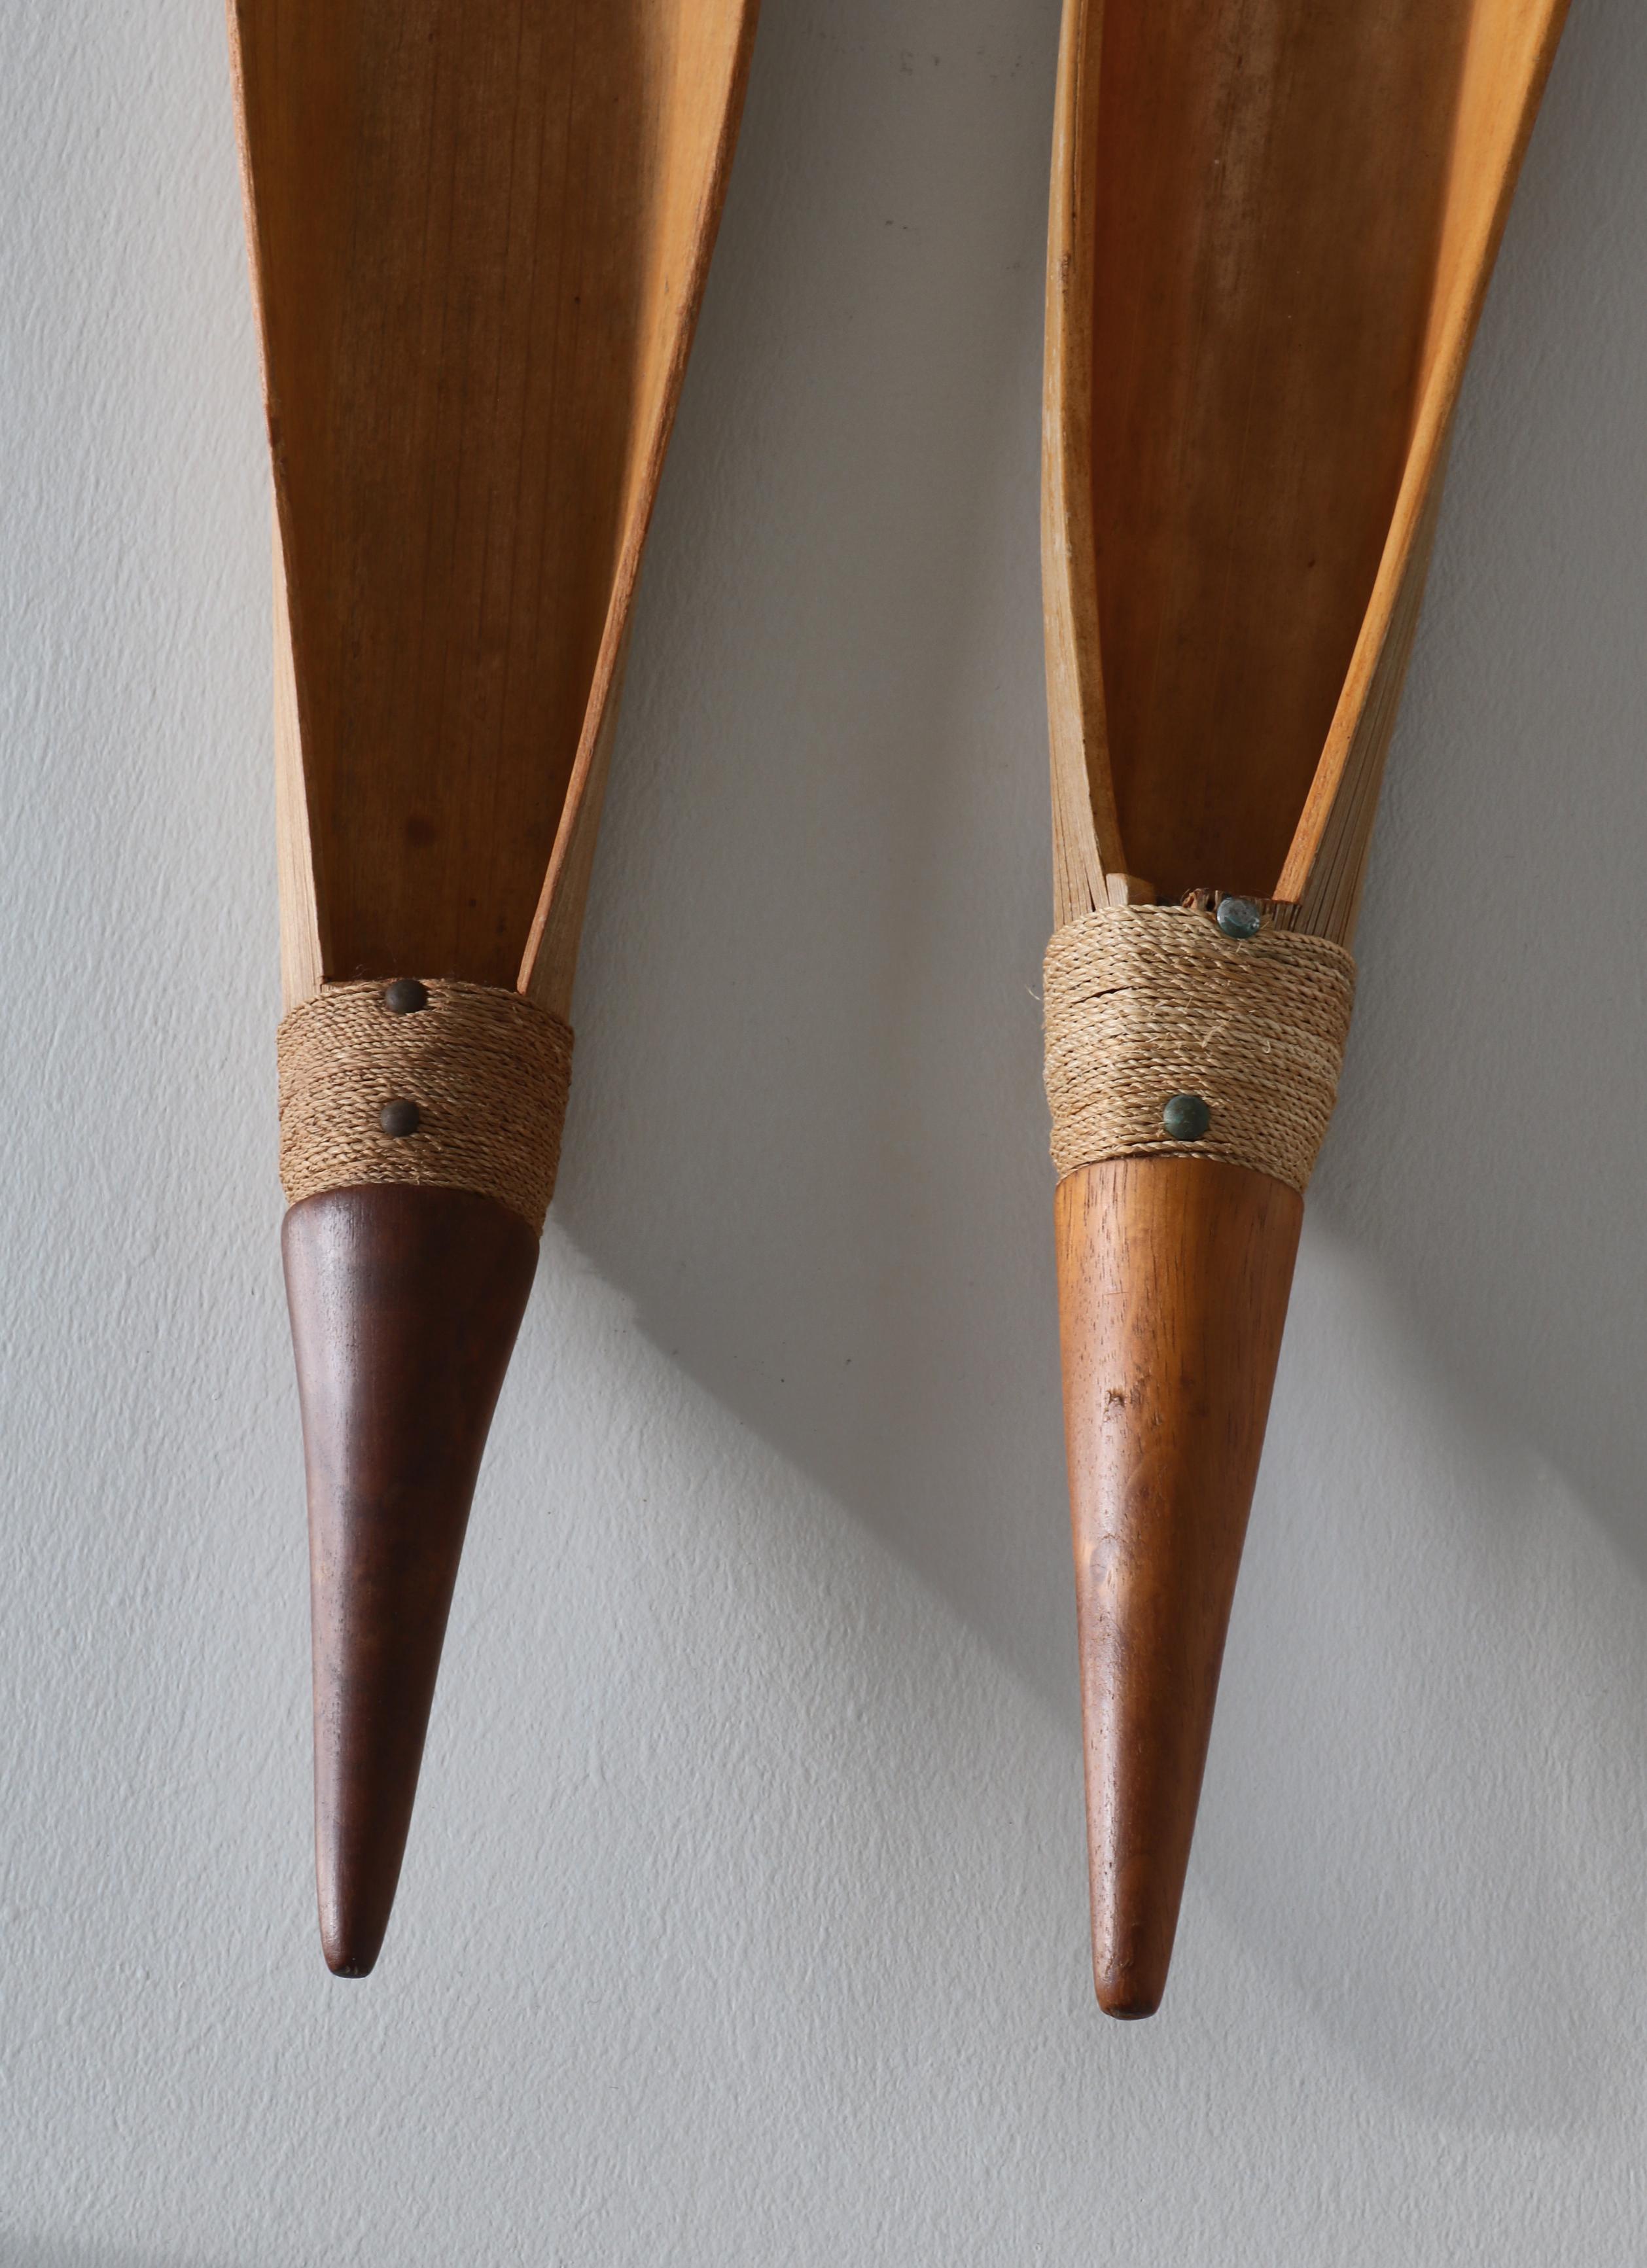 Illums Bolighus Decorative Palm Serving Bowls Teakwood Handles, 1950s, Denmark For Sale 2